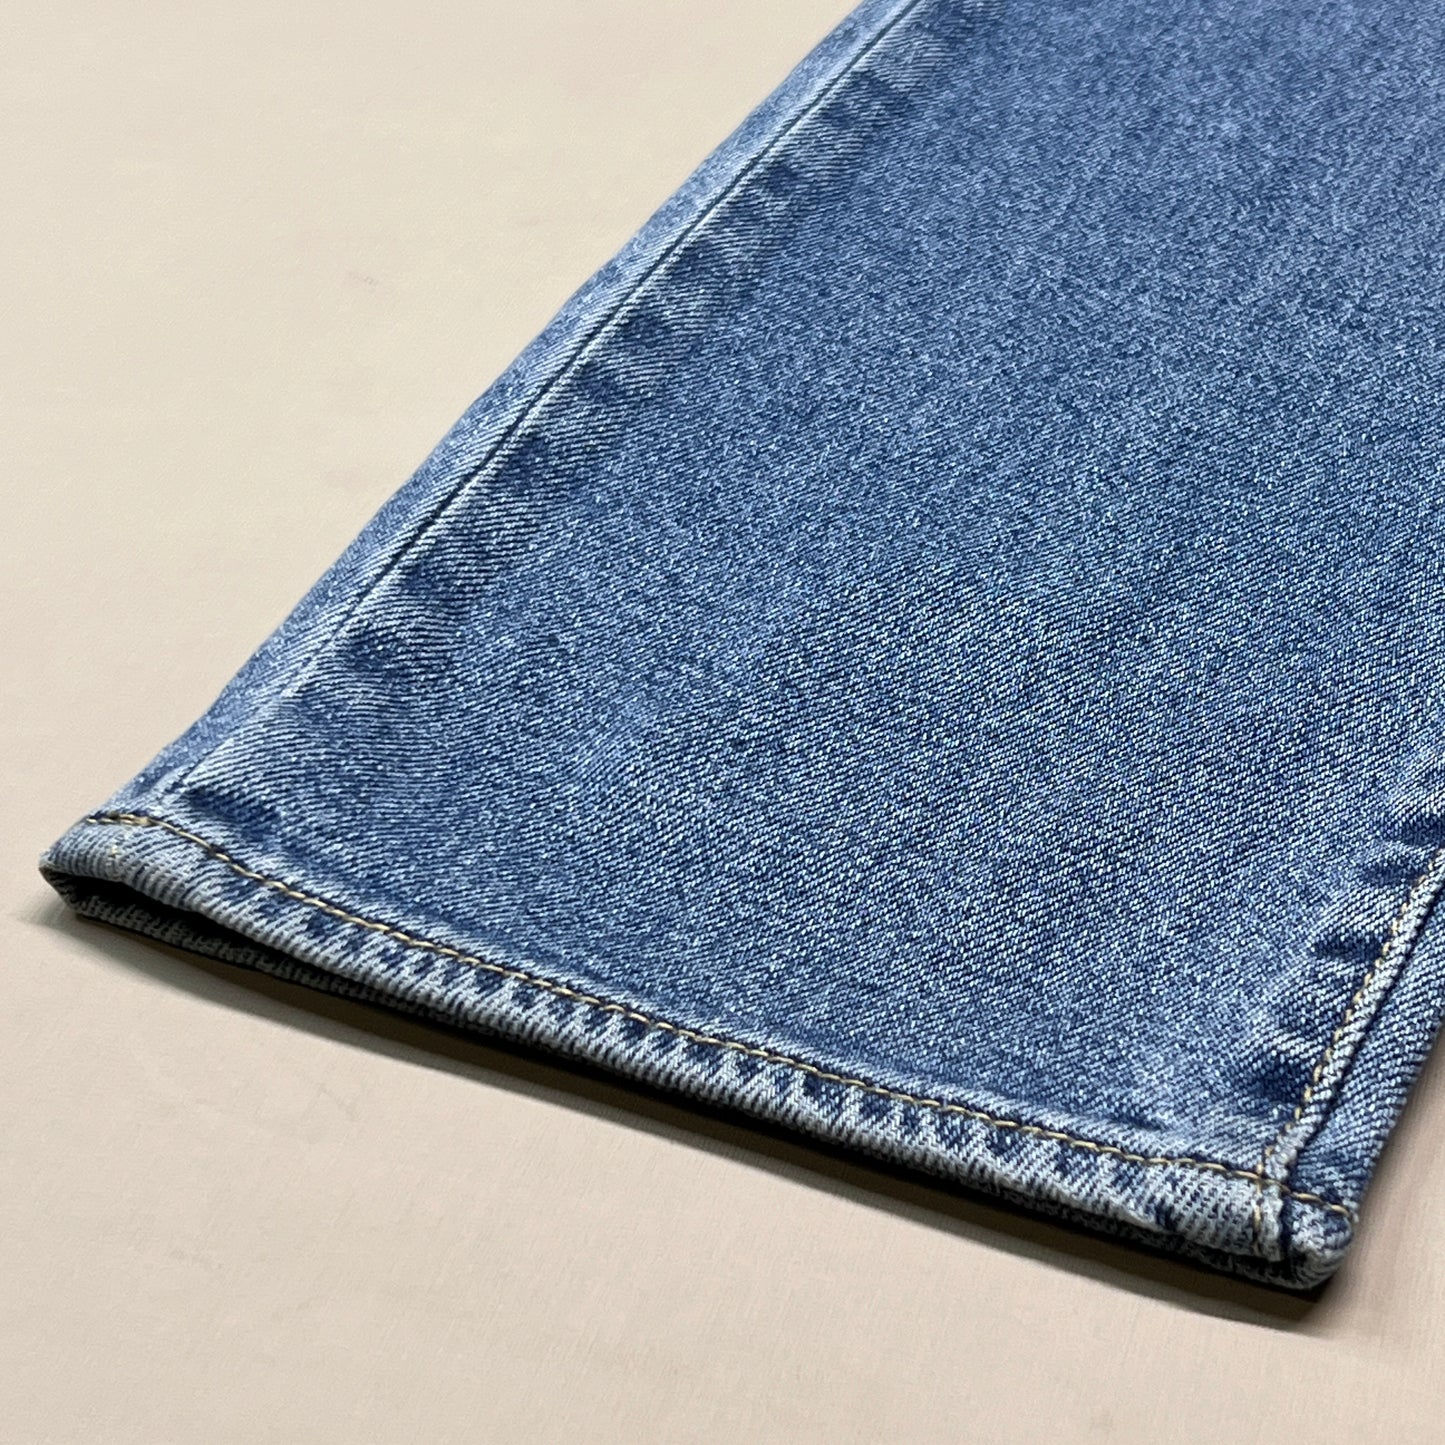 ARTICLES OF SOCIETY OMAO High Rise Denim Jeans Women's Sz 27 Blue 4009TQ3-716 (New)